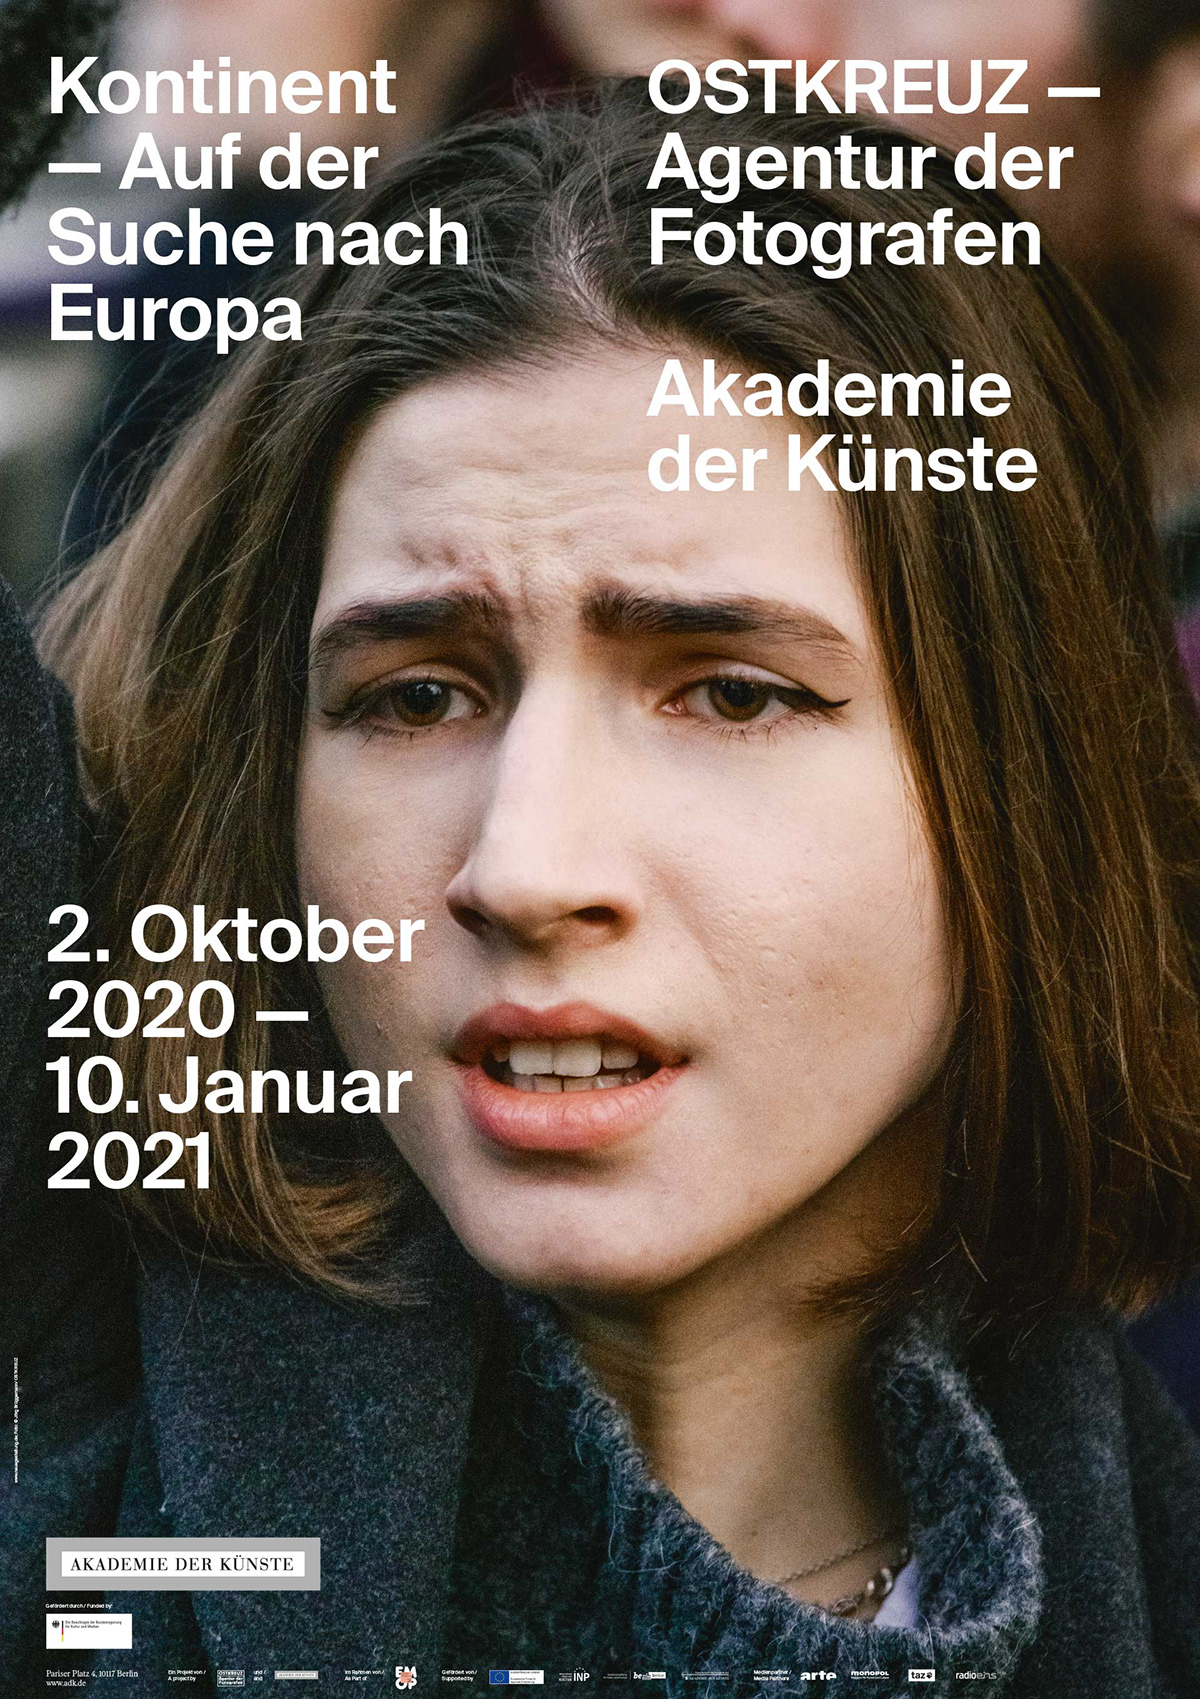 berlin continent Europe Exhibition Design  ostkreuz political photo poster